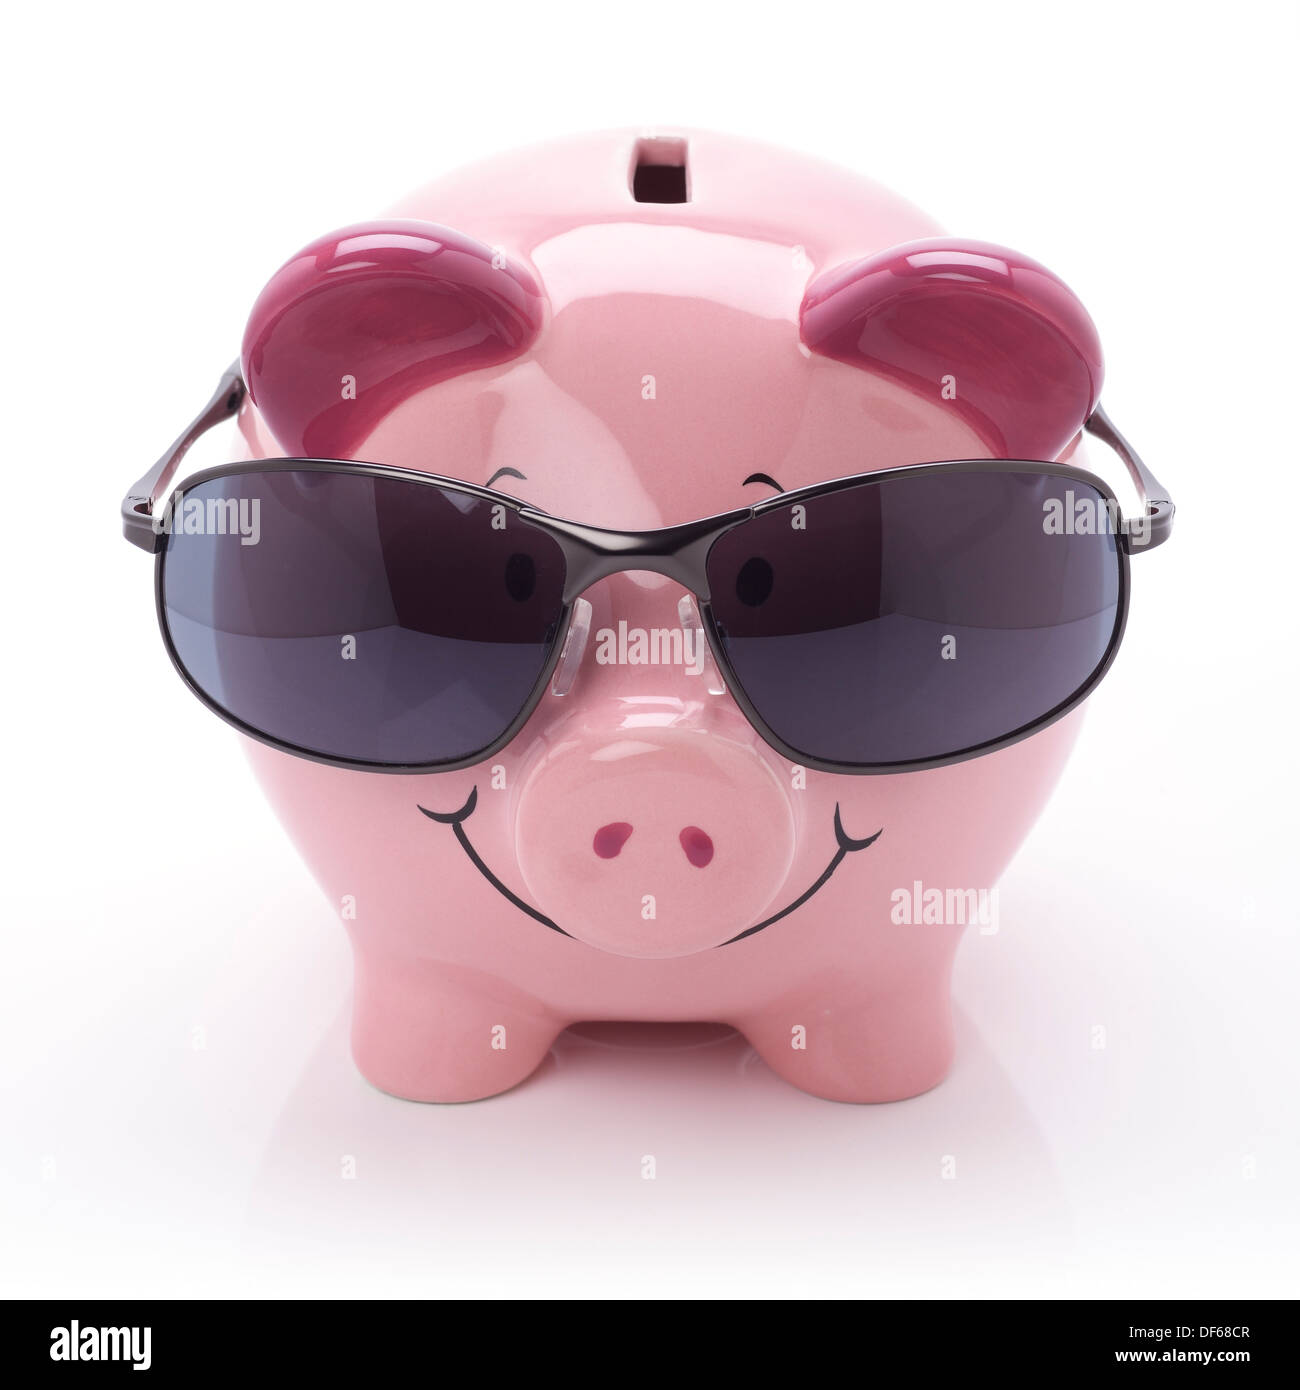 Pink ceramic piggy bank wearing sunglasses Stock Photo